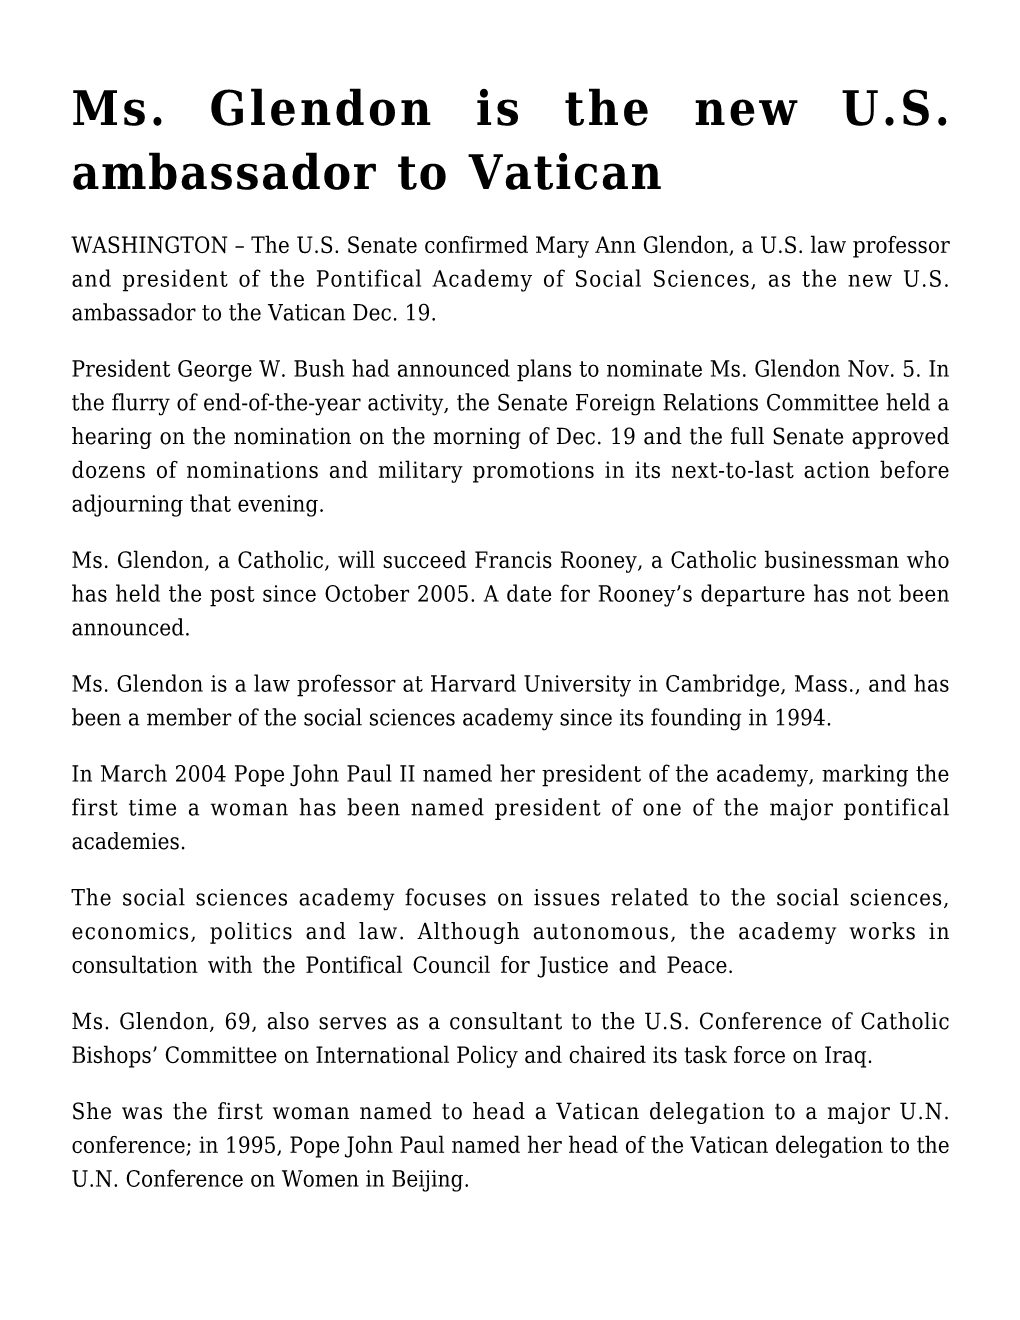 Ms. Glendon Is the New U.S. Ambassador to Vatican